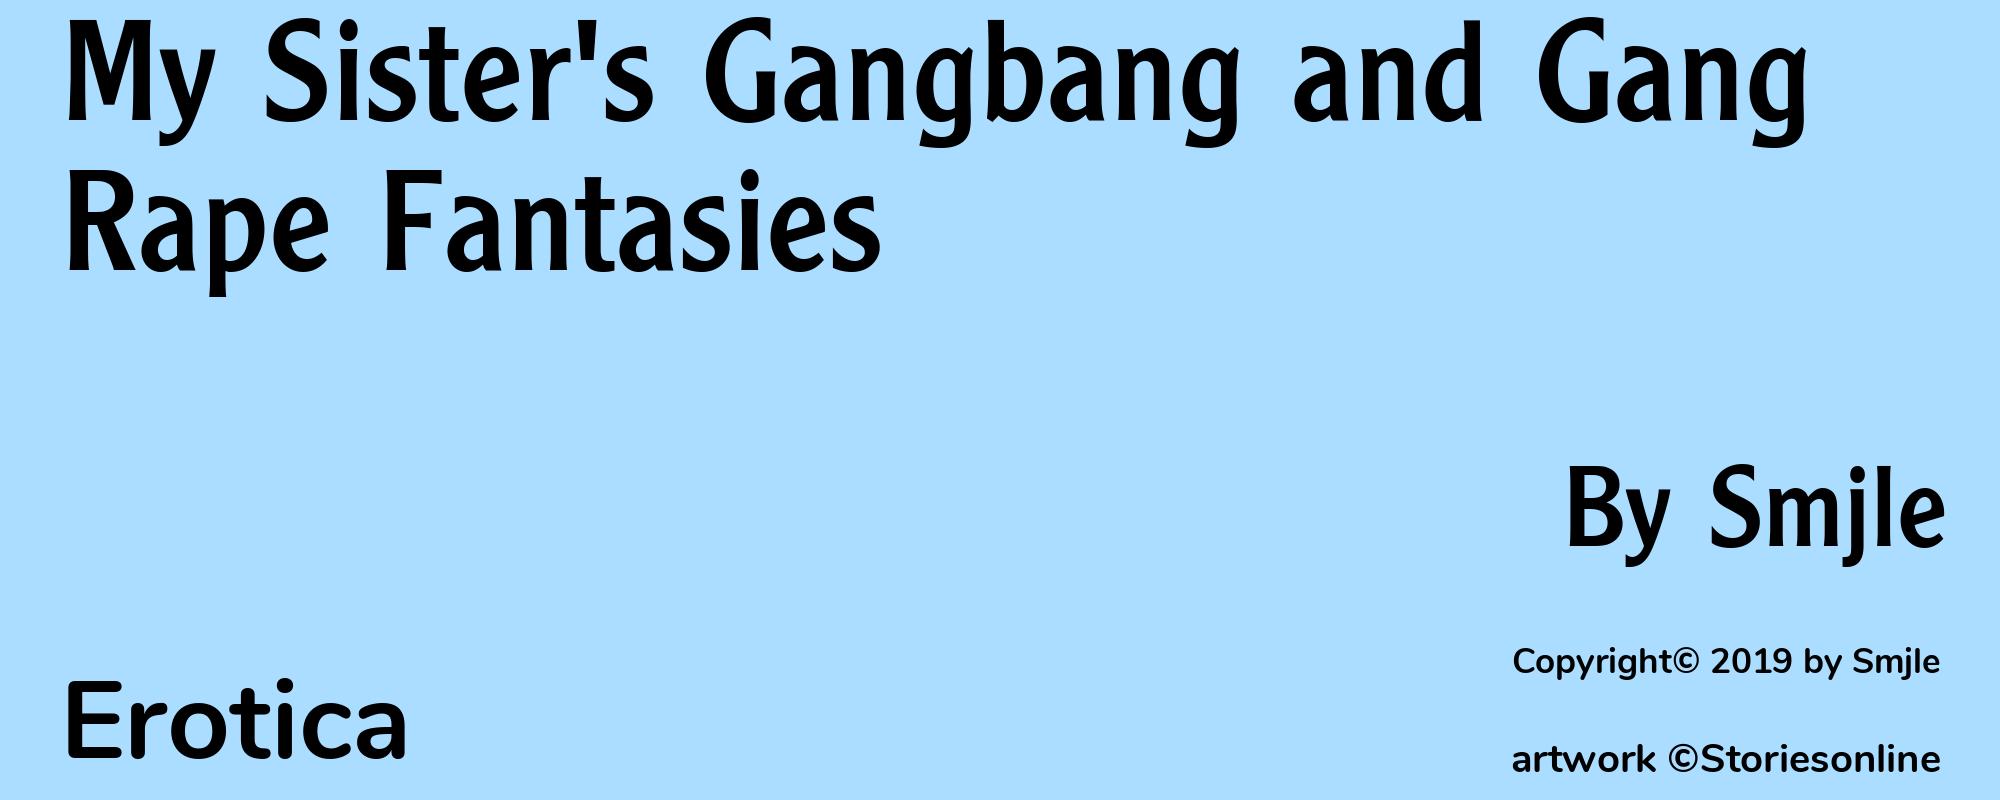 My Sister's Gangbang and Gang Rape Fantasies - Cover